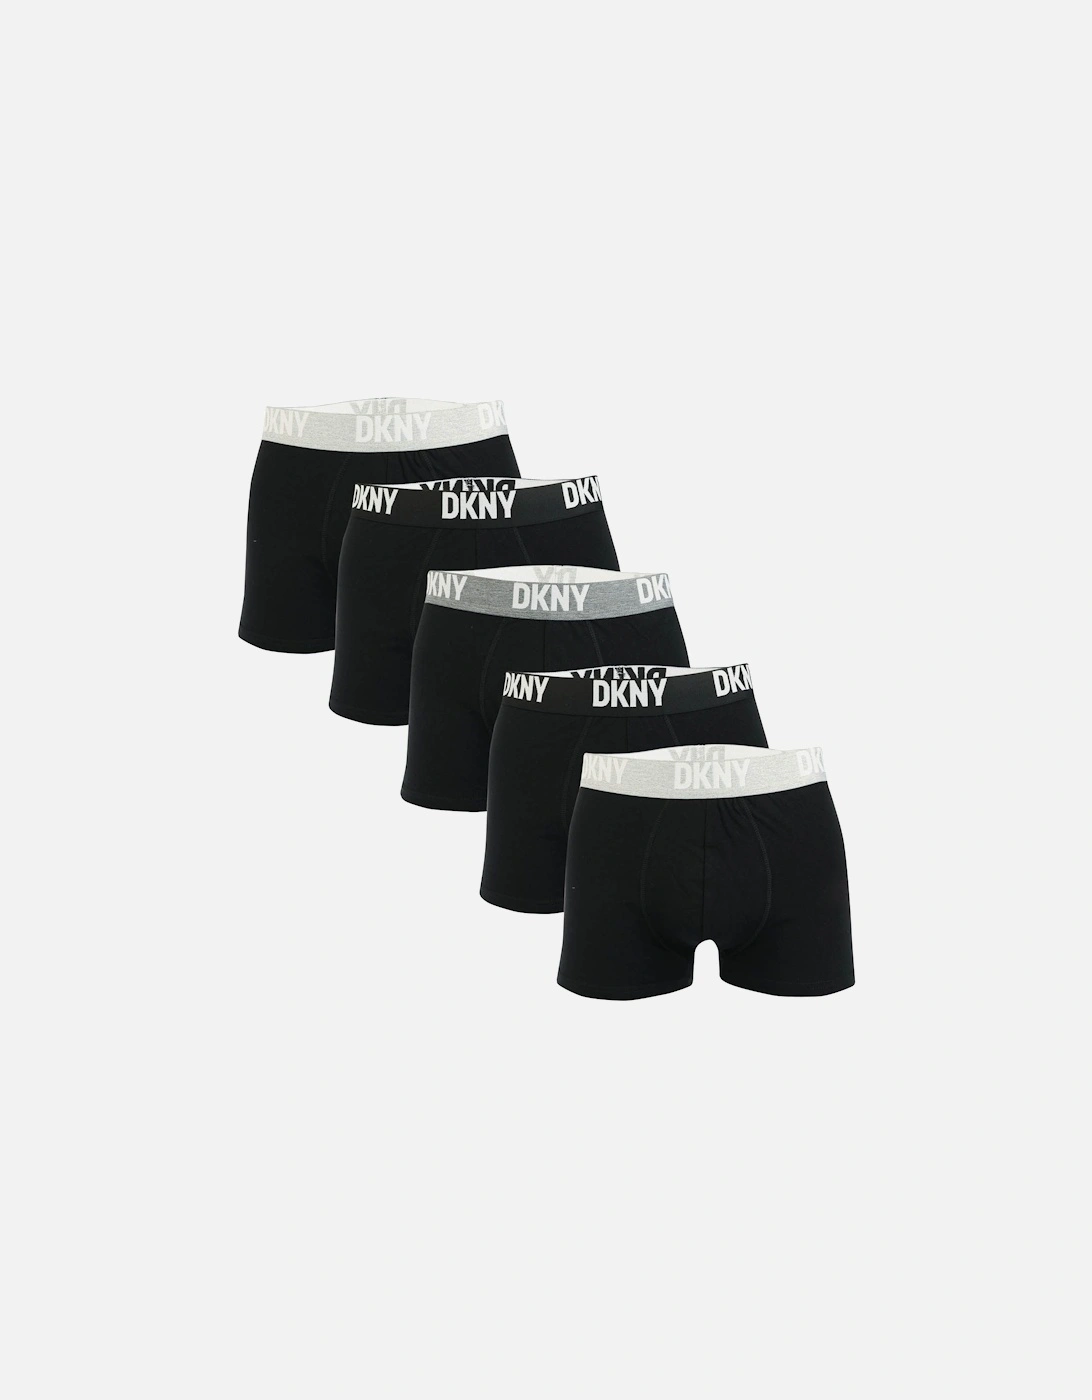 Mens Portland 5 Pack Trunk Boxer Shorts